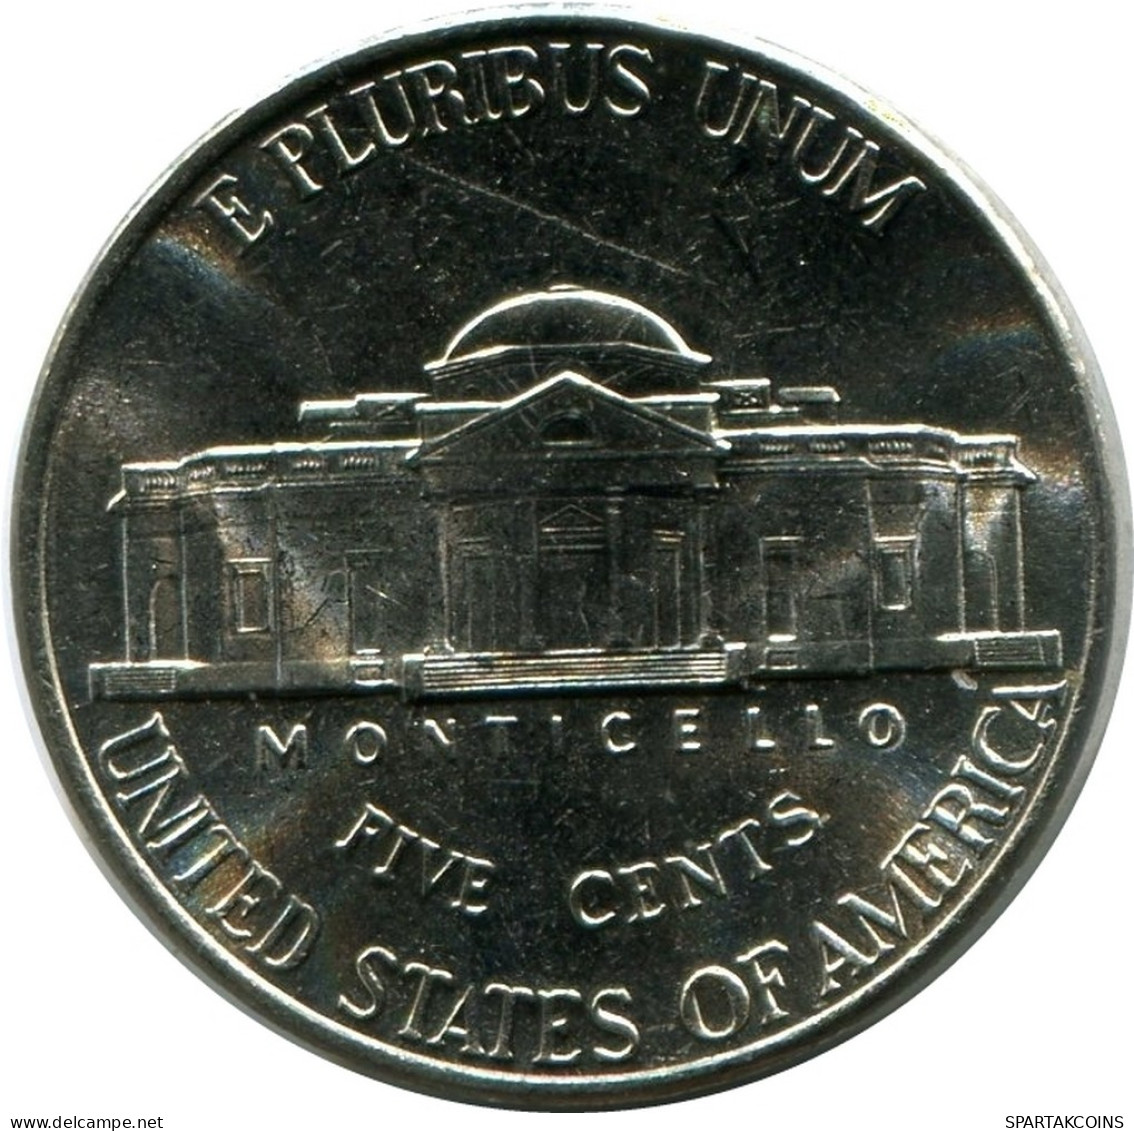 5 CENTS 2000 USA UNC Coin #M10282.U - 2, 3 & 20 Cent